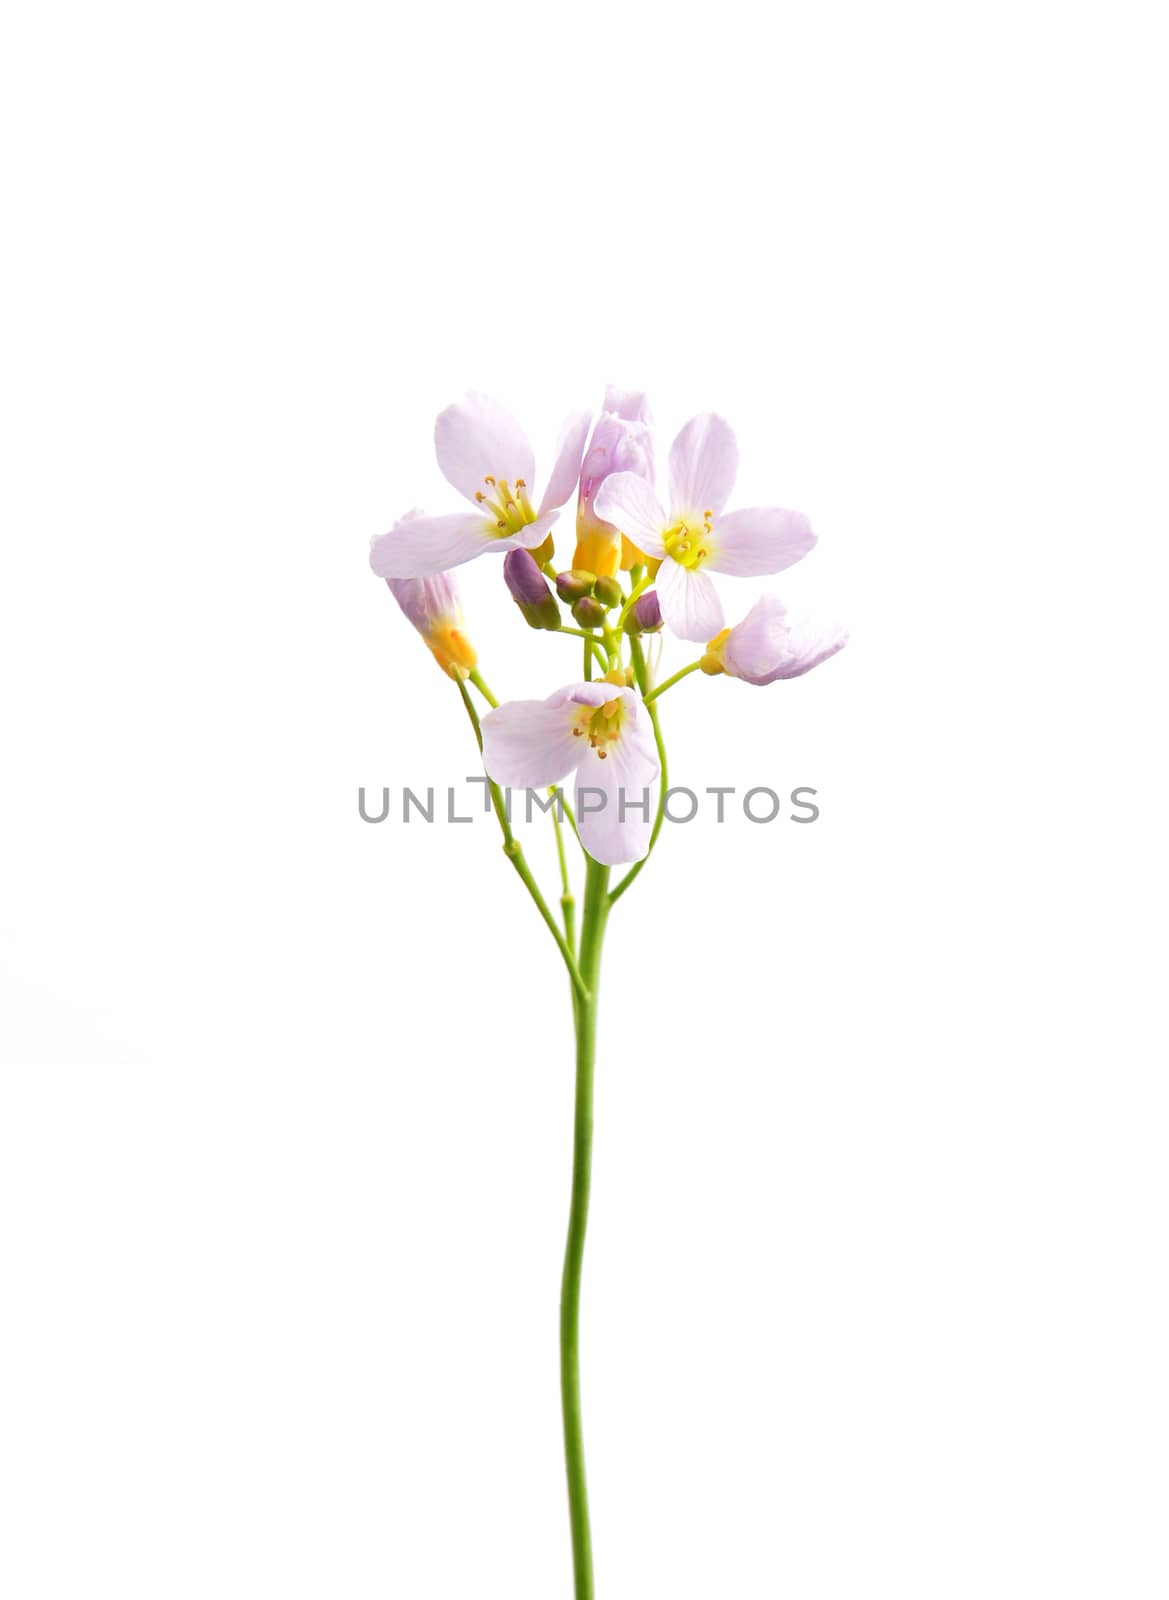 Cuckoo flower (Cardamine pratensis) by rbiedermann